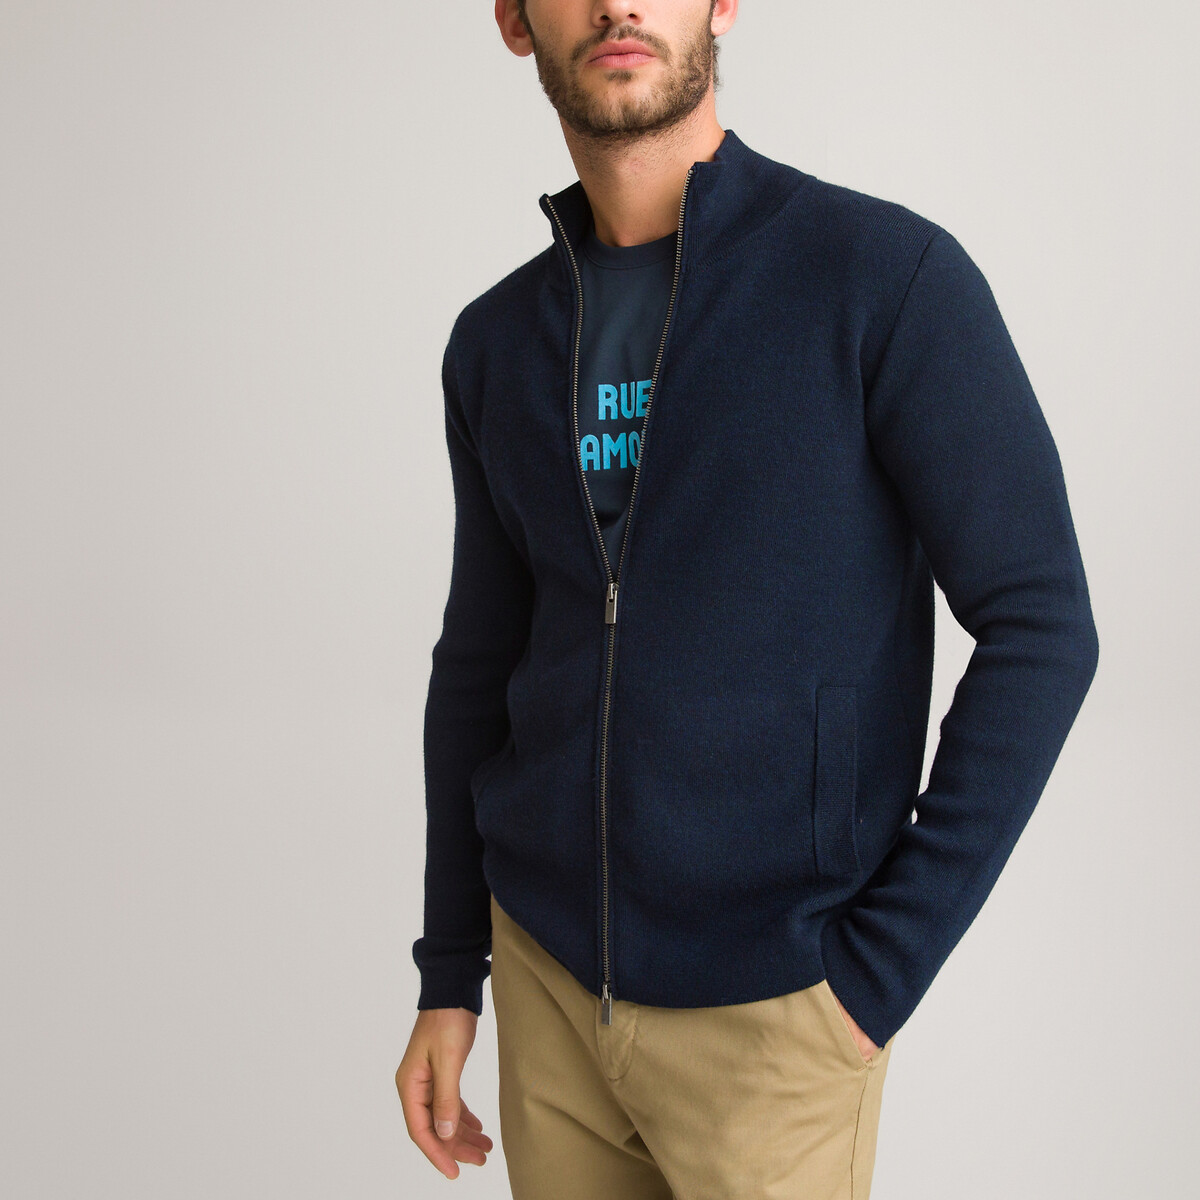 NOBRAND New Mens Zipper Cardigan Hooded Sweater Popular Mens Sweater 